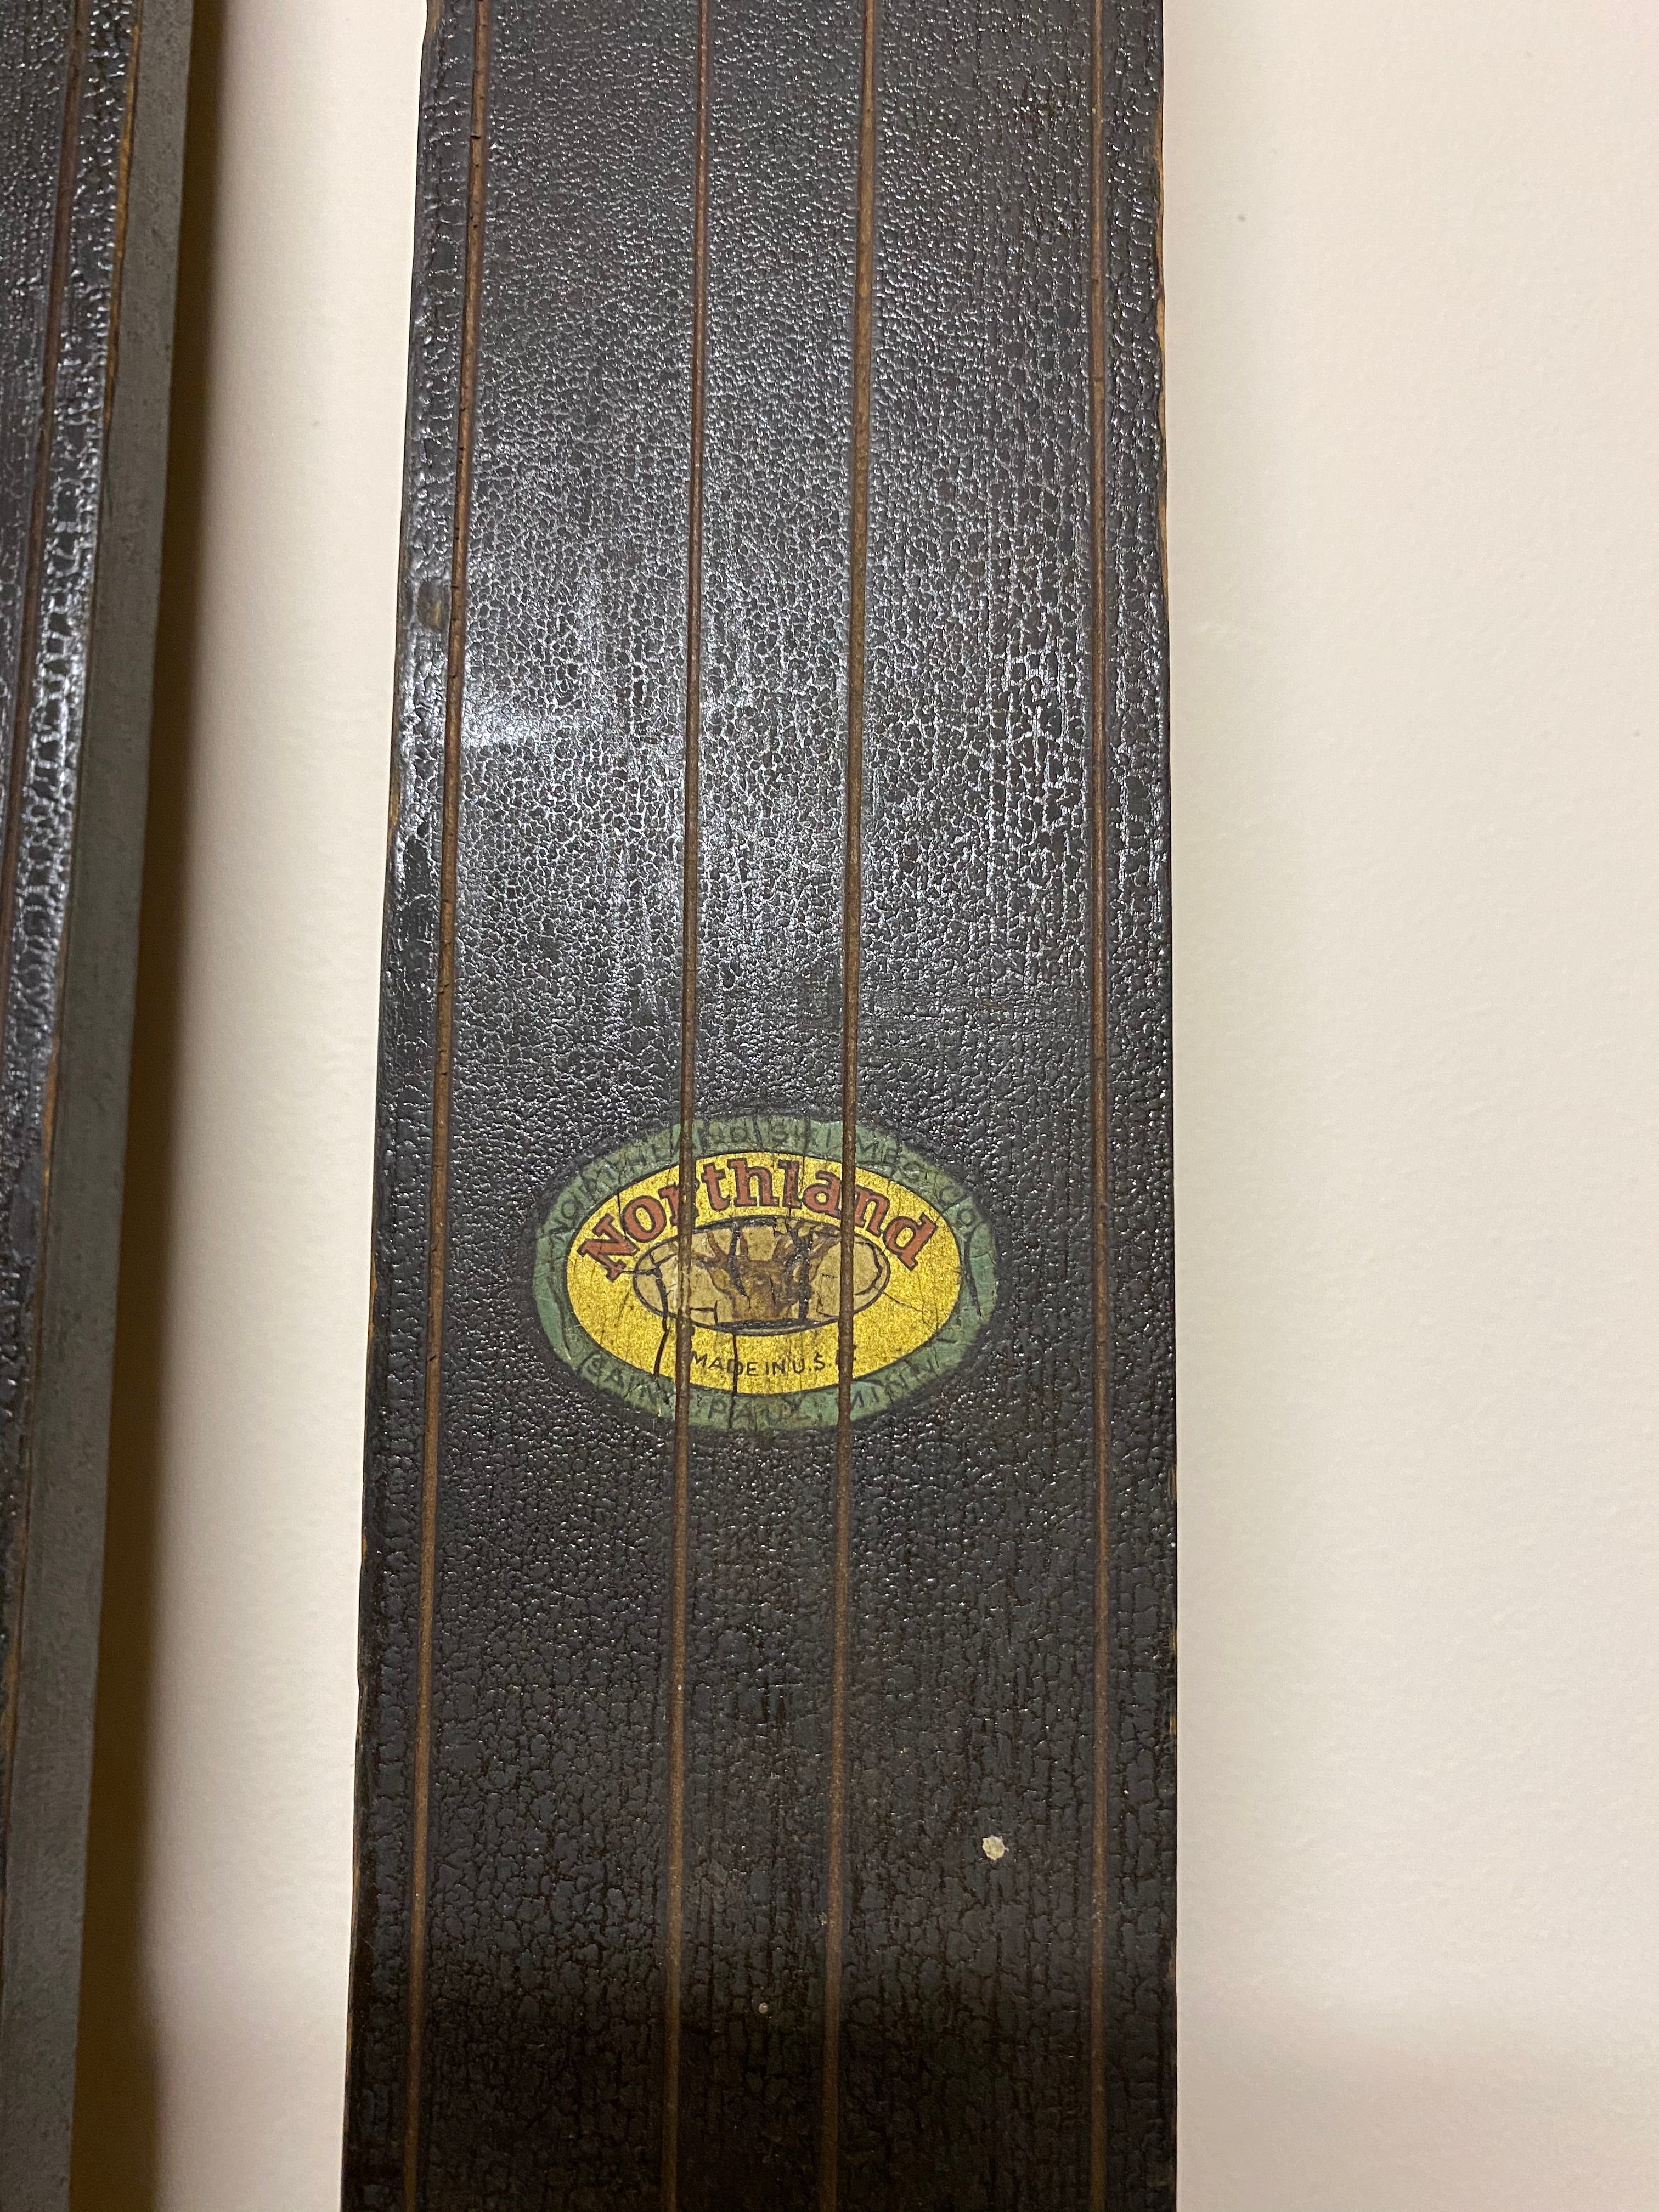 Vintage Wooden Northland Skis 180cm